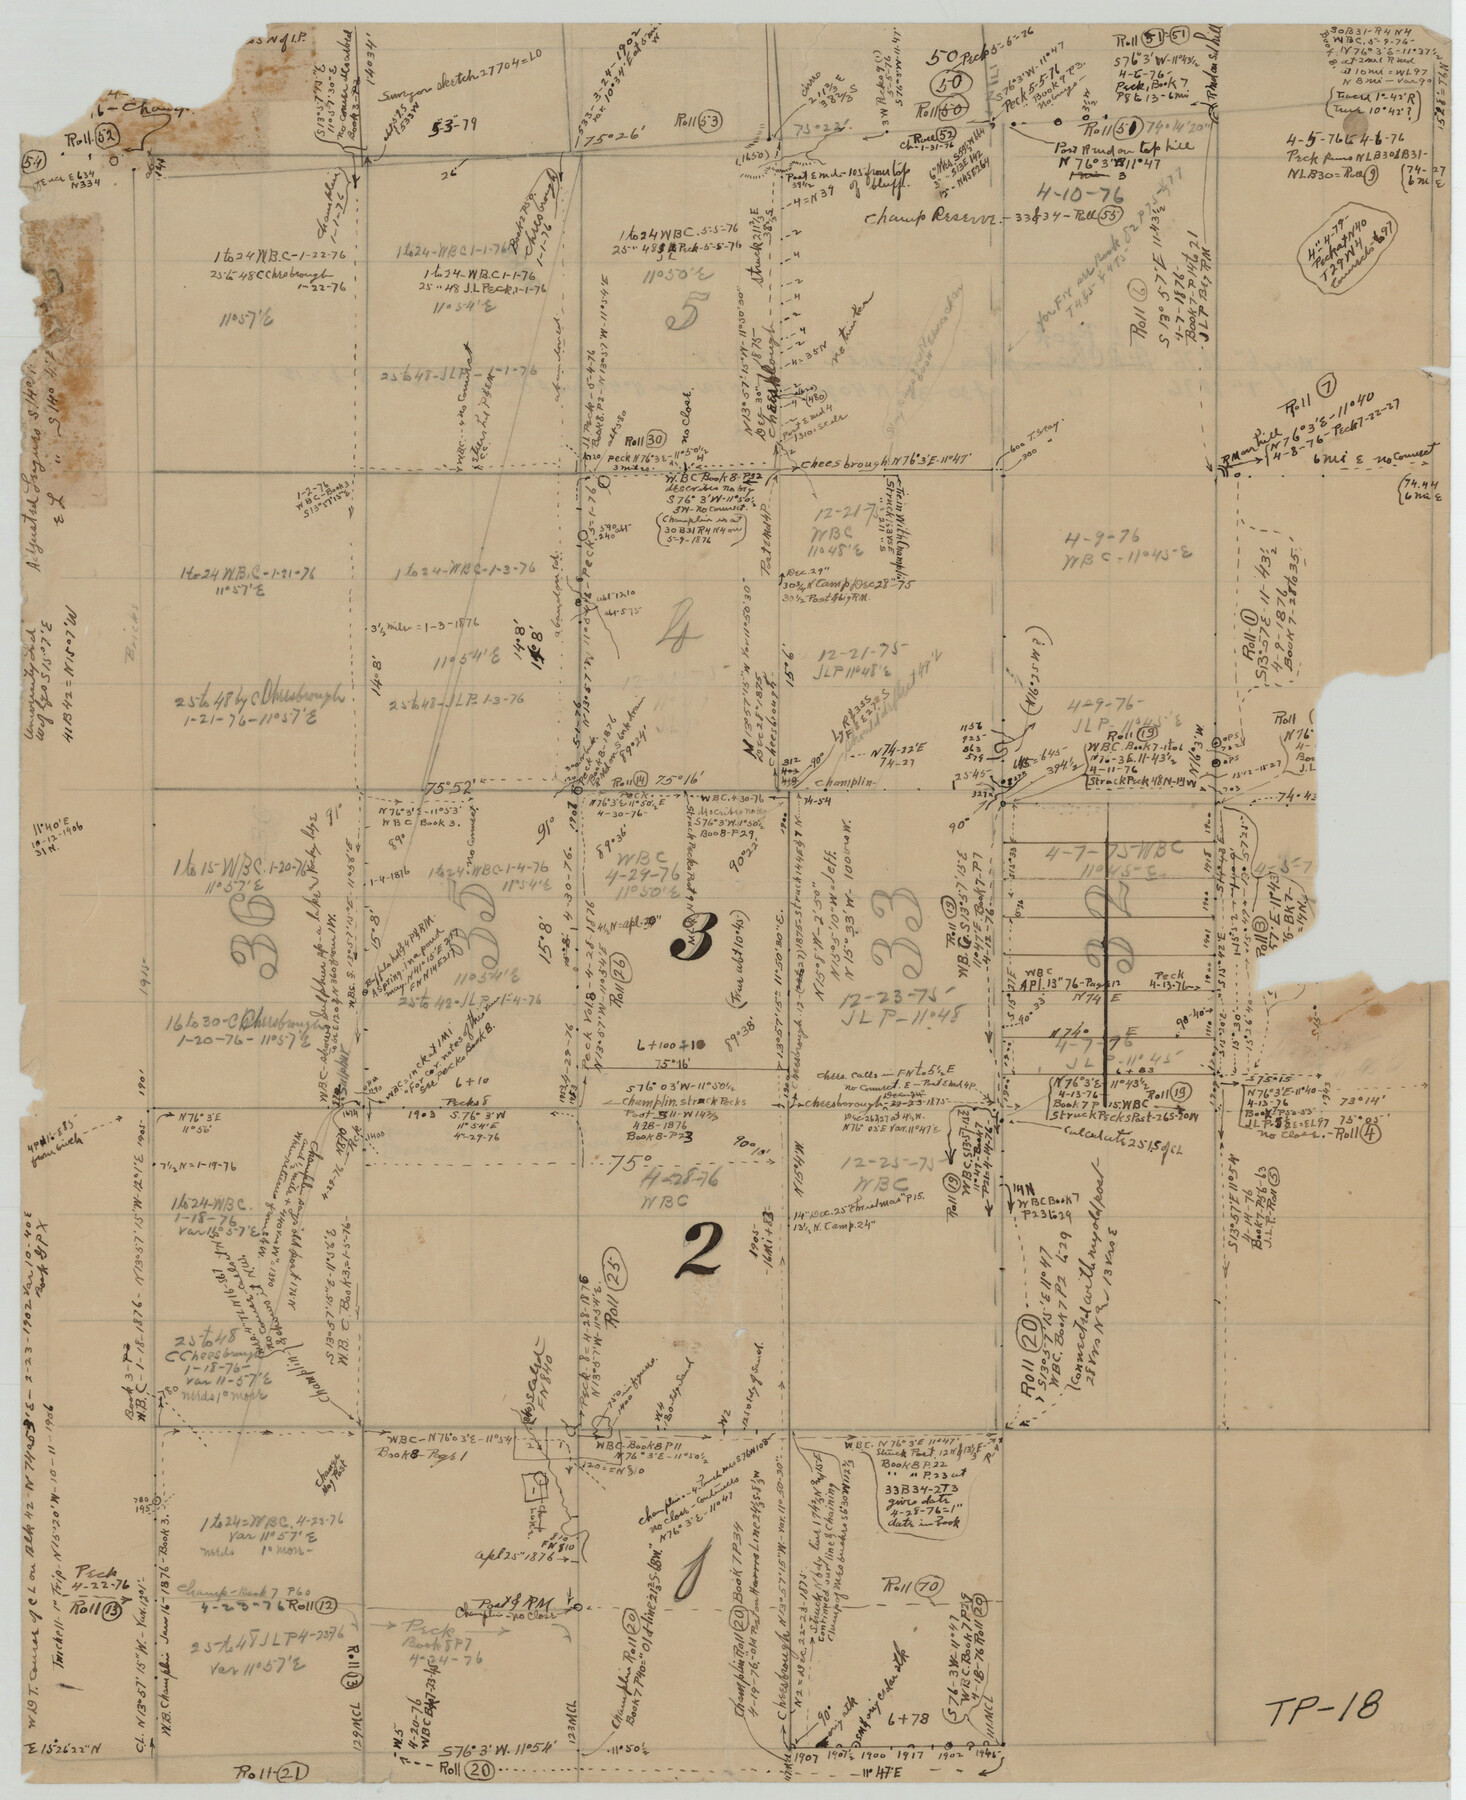 93054, [T. & P. Blocks 31-36, Townships 1N-5N], Twichell Survey Records